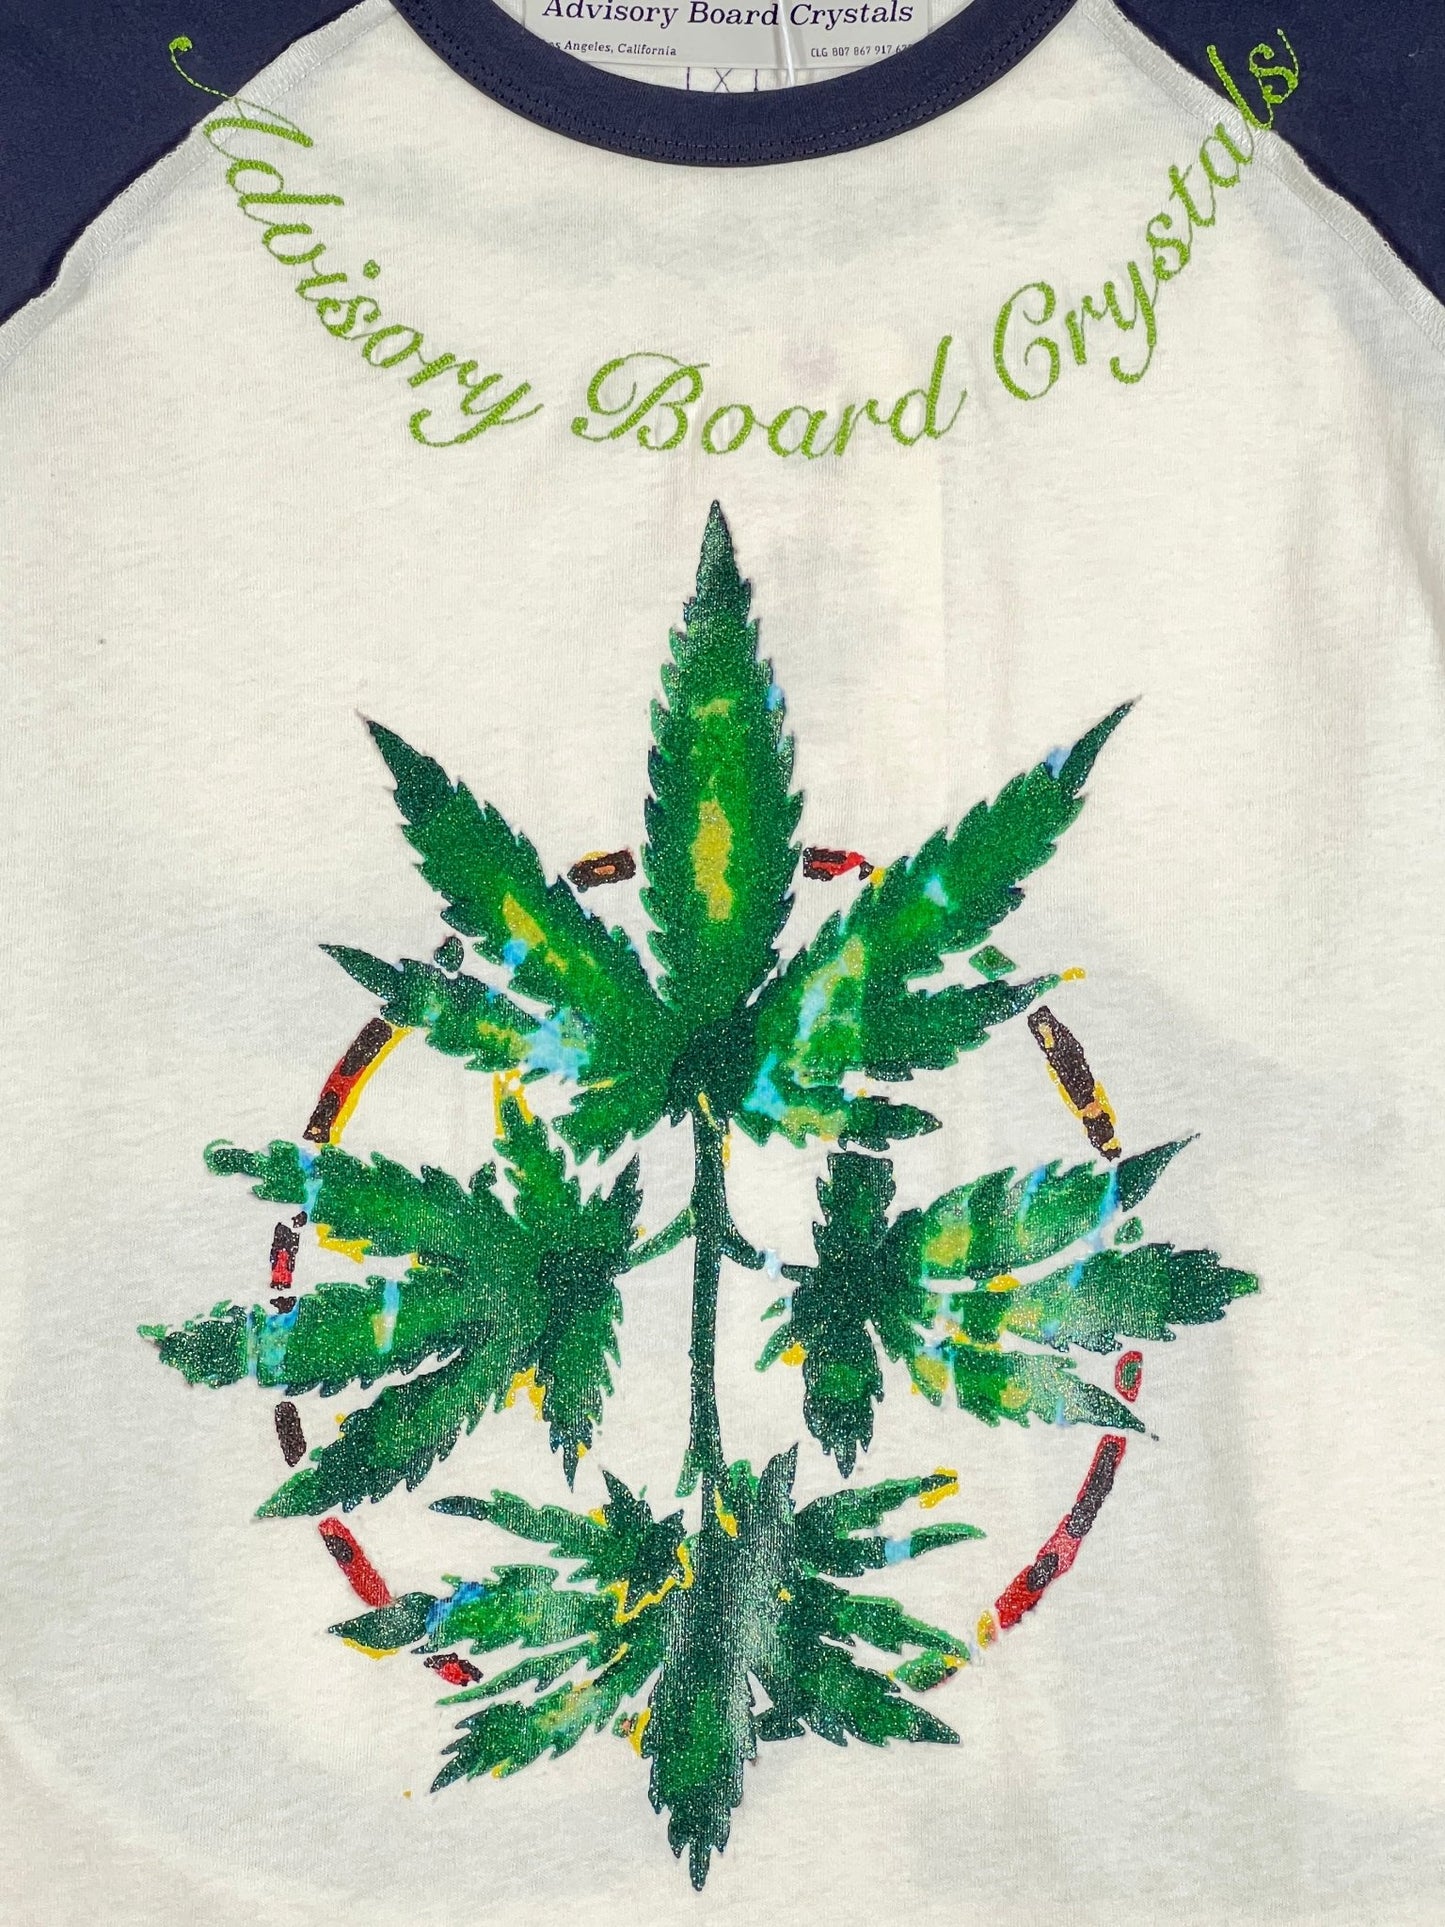 A ADVISORY BOARD CRYSTALS 100% cotton t-shirt with a marijuana leaf on it.